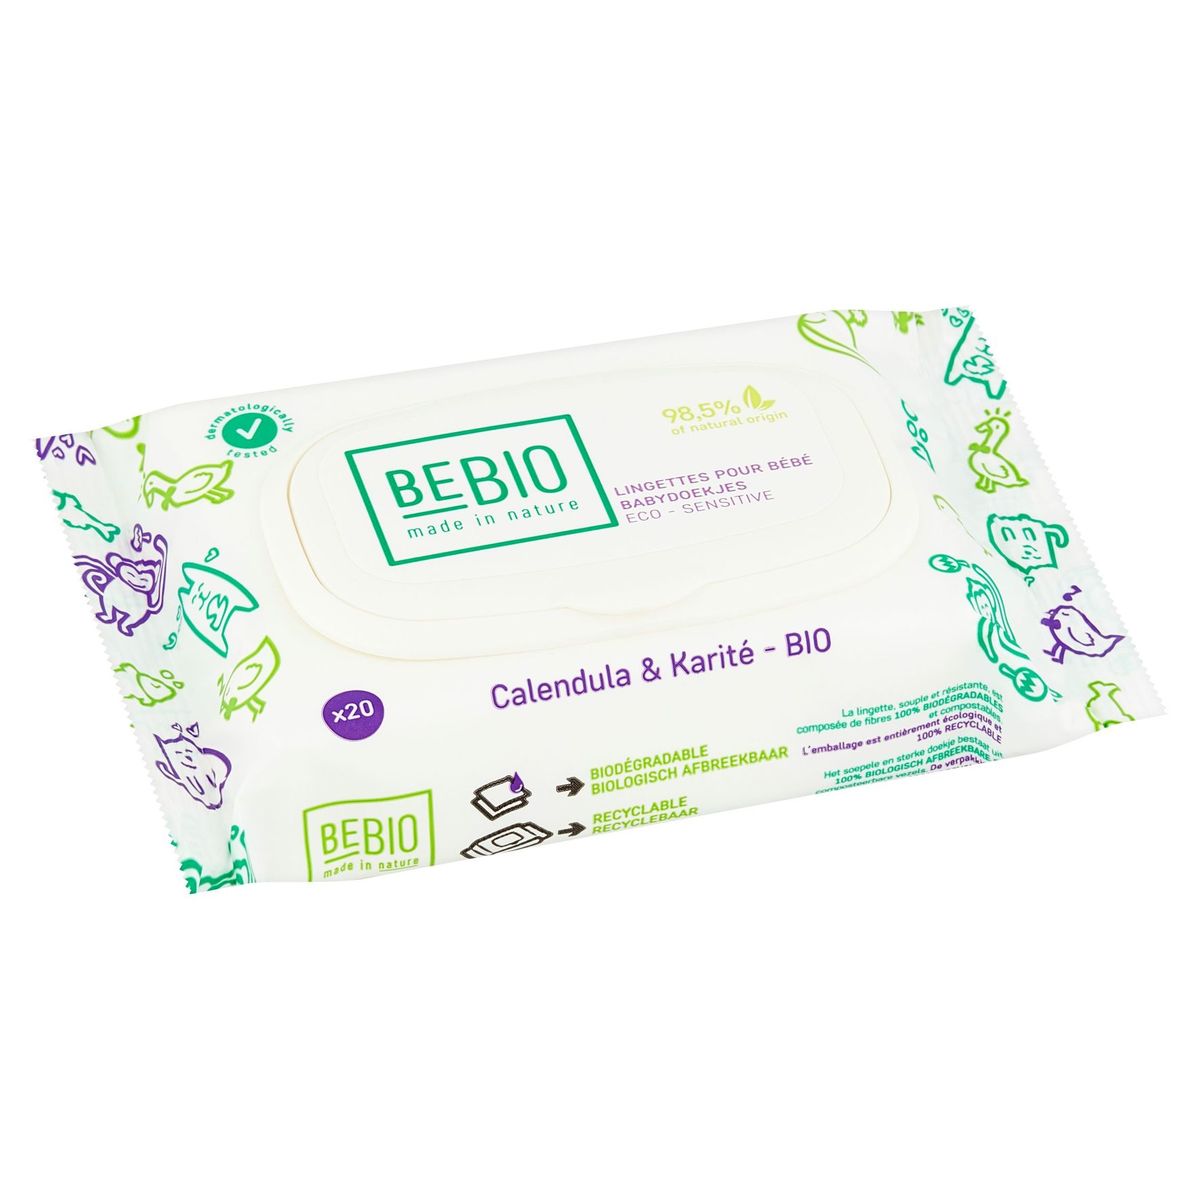 Bebio Babydoekjes Eco - Sensitive Calendula & Karité Bio 20 Stuks